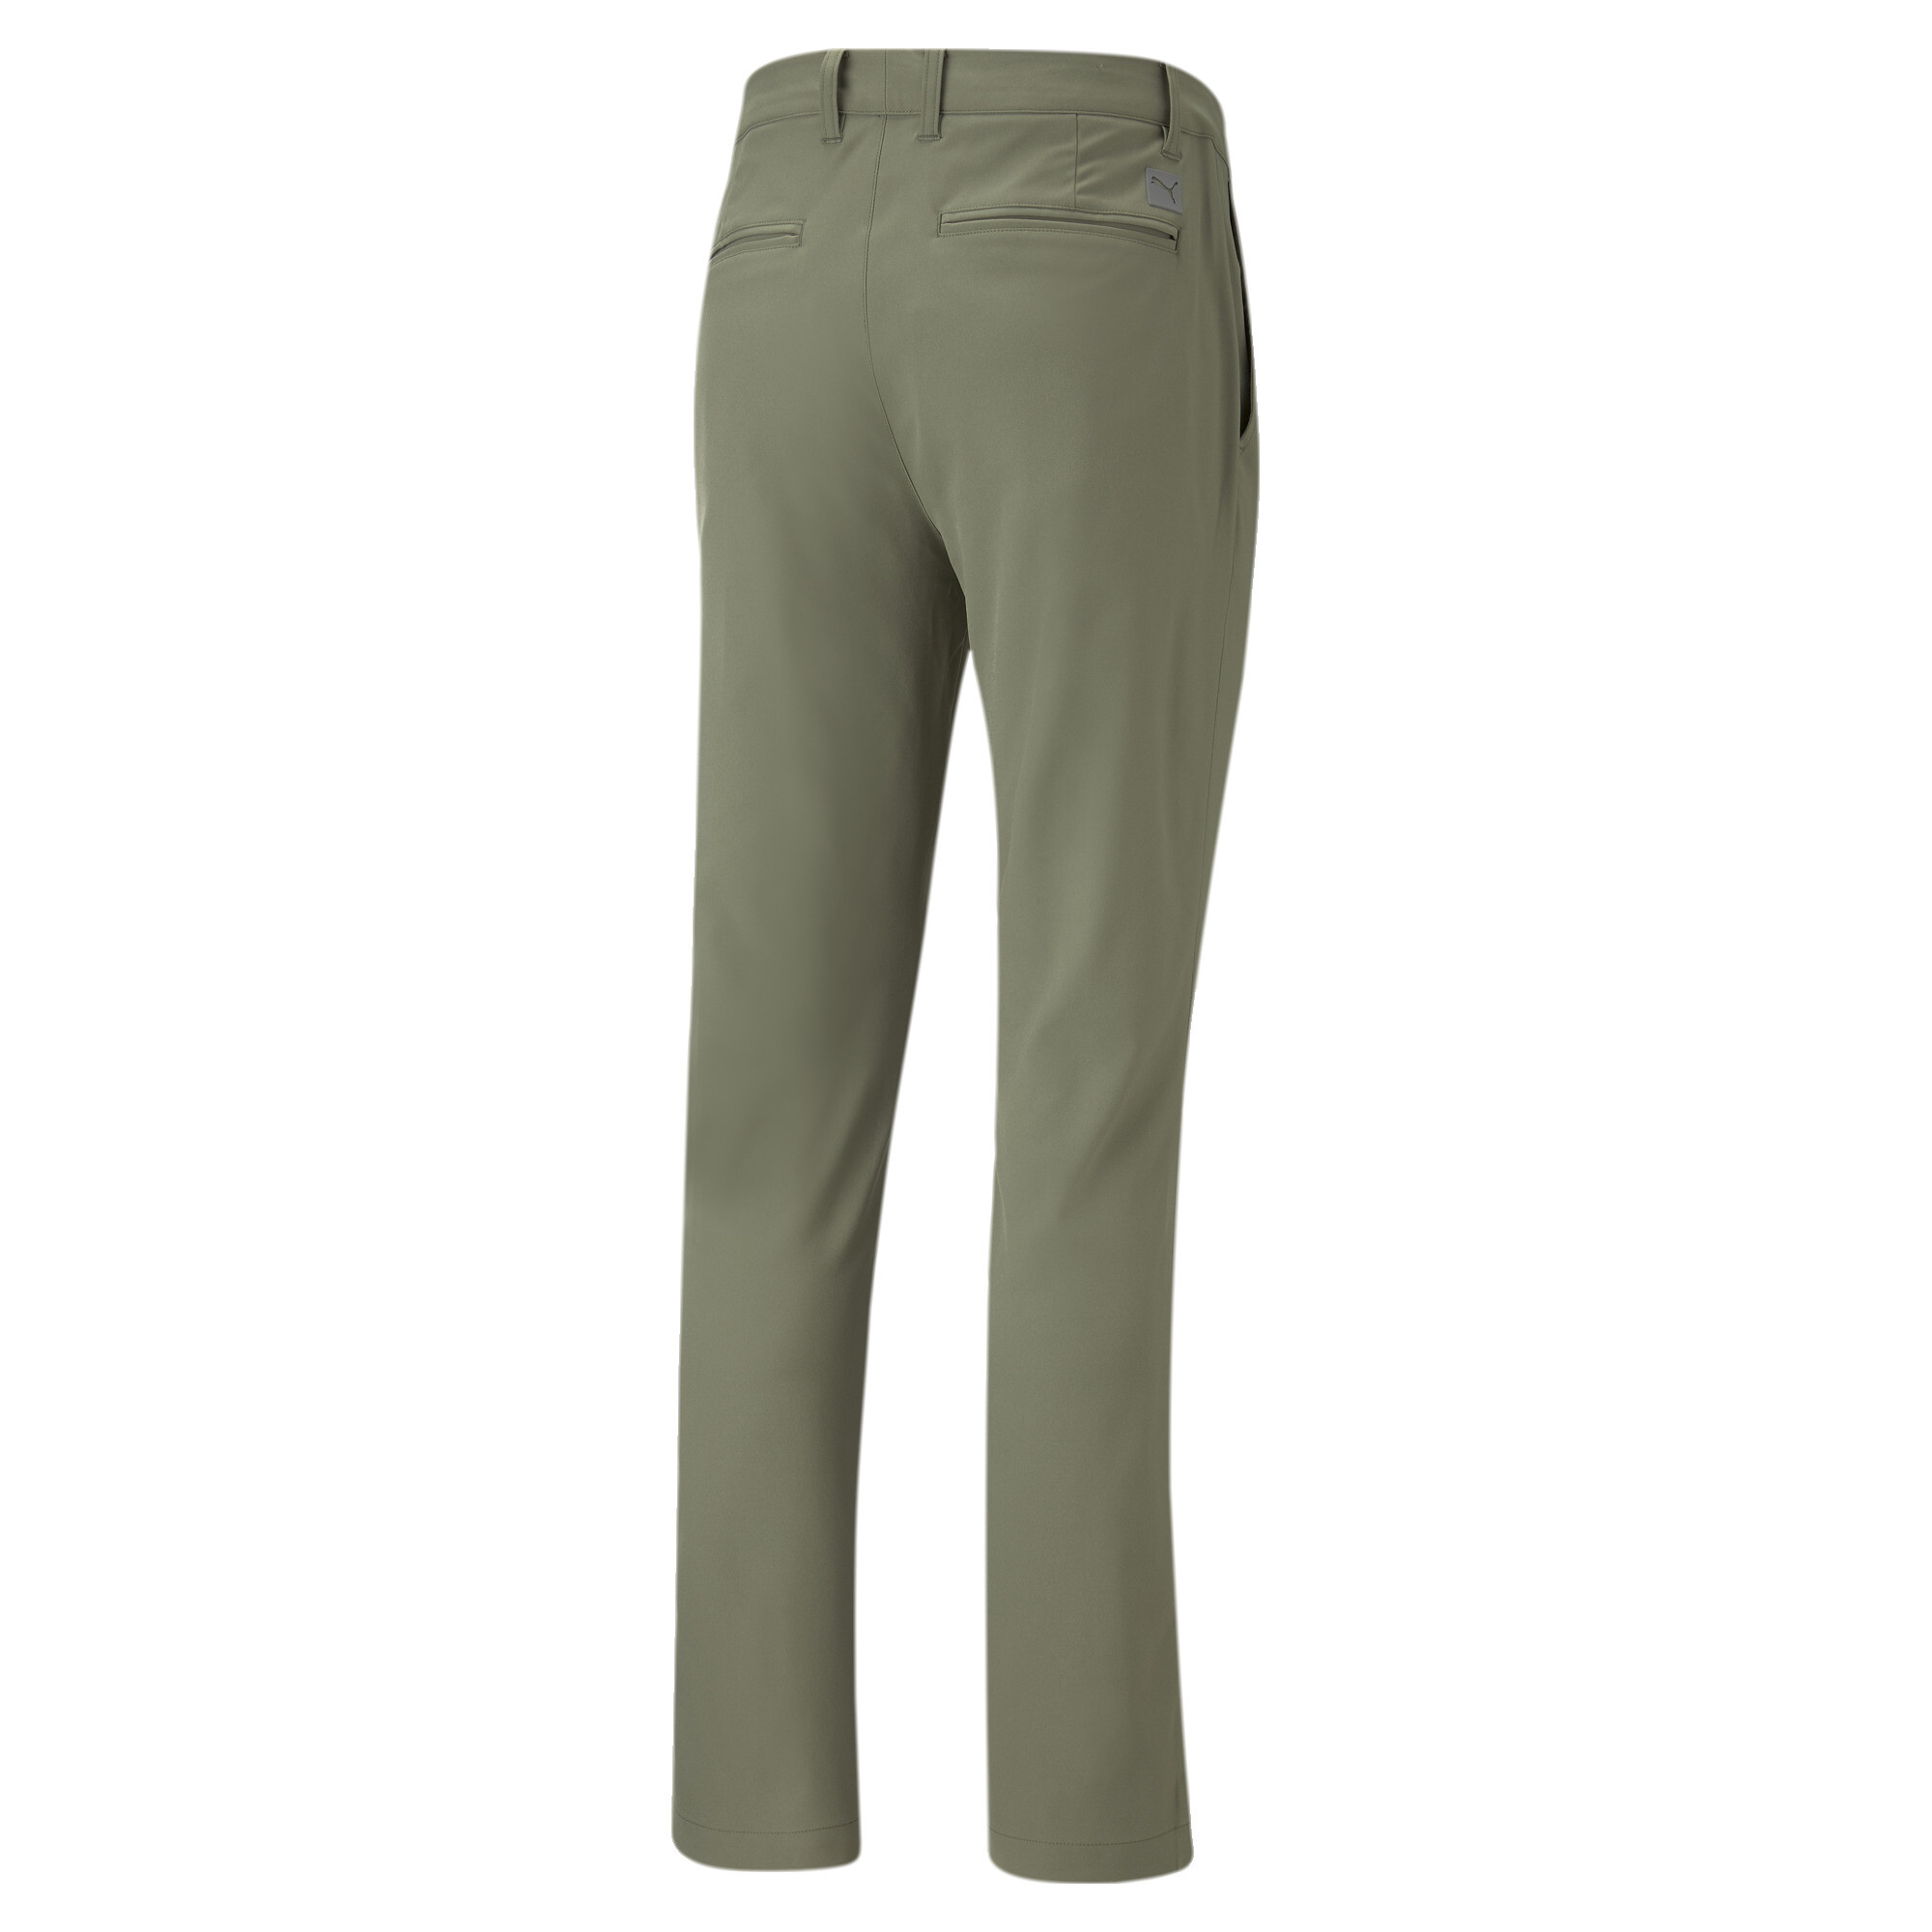 Men's Puma Dealer Tailored Golf Pants, Green, Size 38/36, Clothing